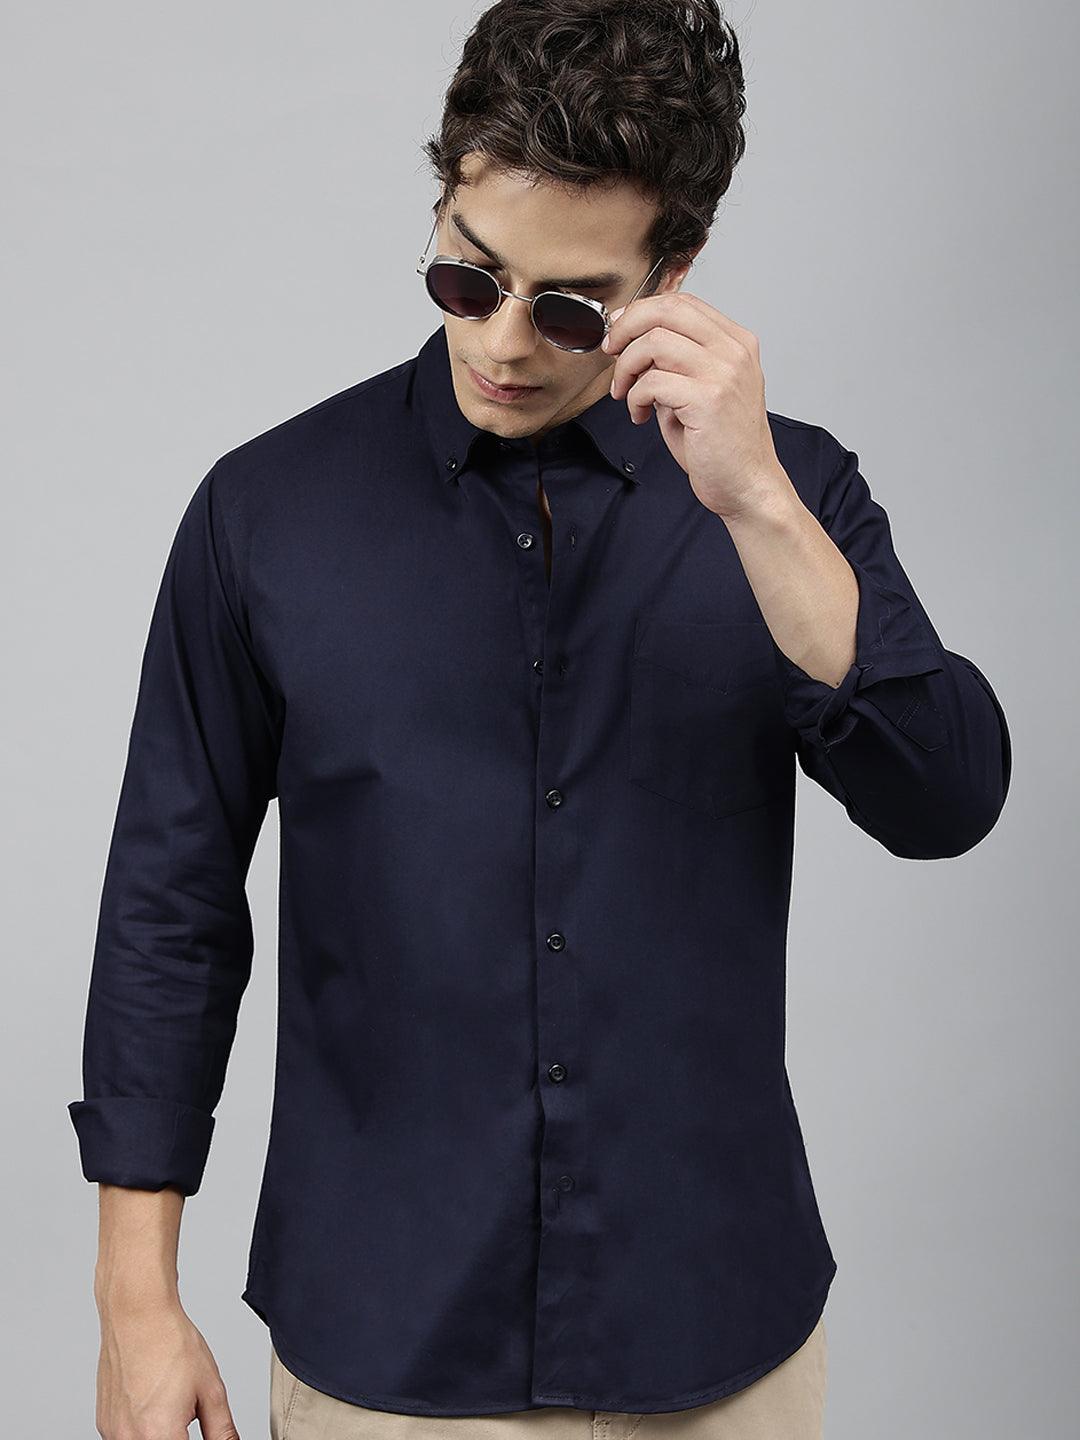 Men Navy Blue Solid Pure Cotton Slim Fit Casual Shirt